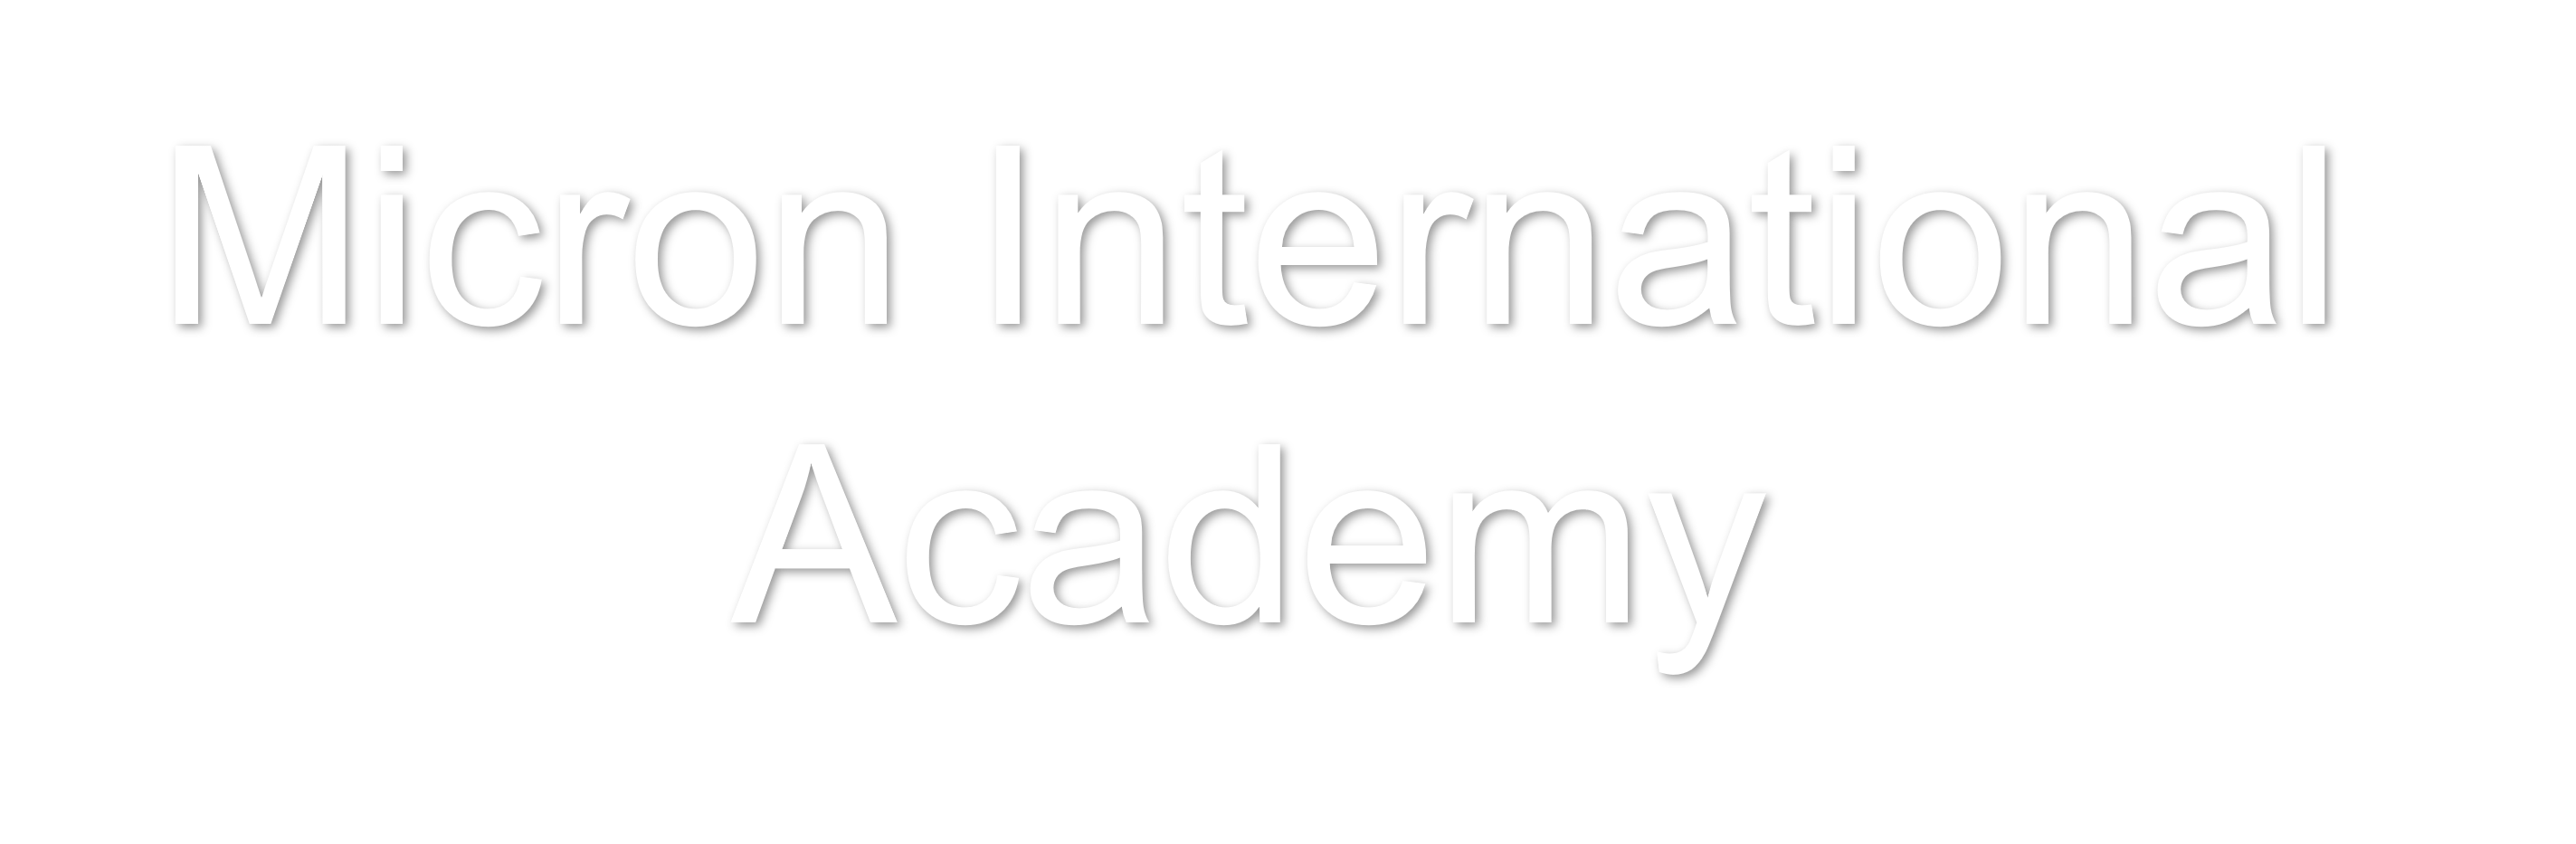 Micron International Academy